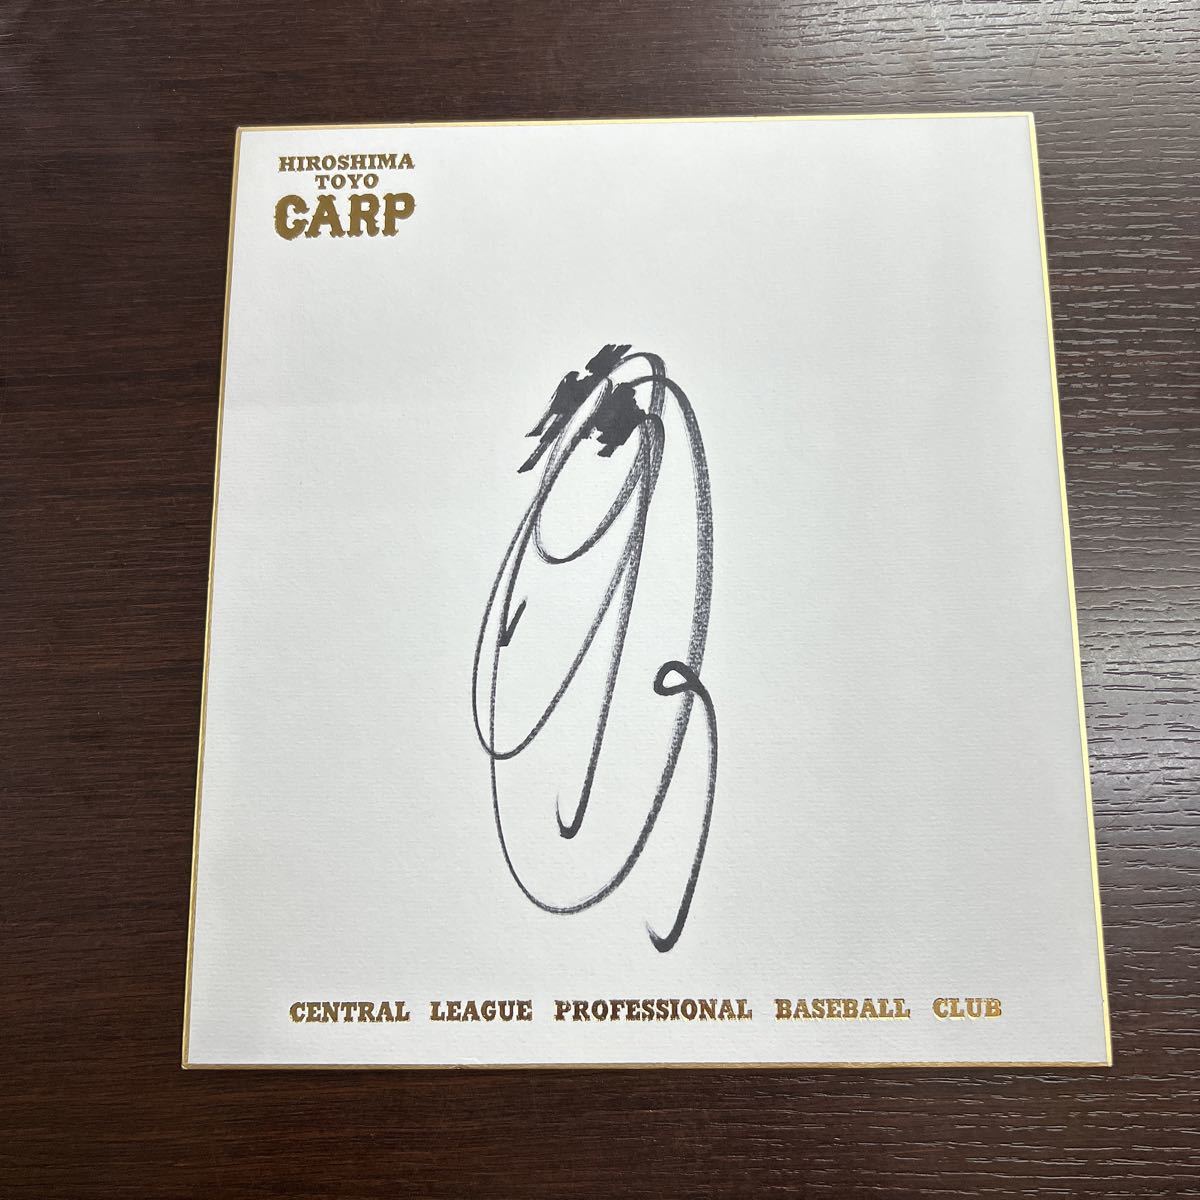 CARP/ Hiroshima Toyo Carp Ogata papier de couleur dédicacé No. 9 Carp papier de couleur dédicacé officiel logo CARP, base-ball, Souvenir, Marchandises connexes, signe